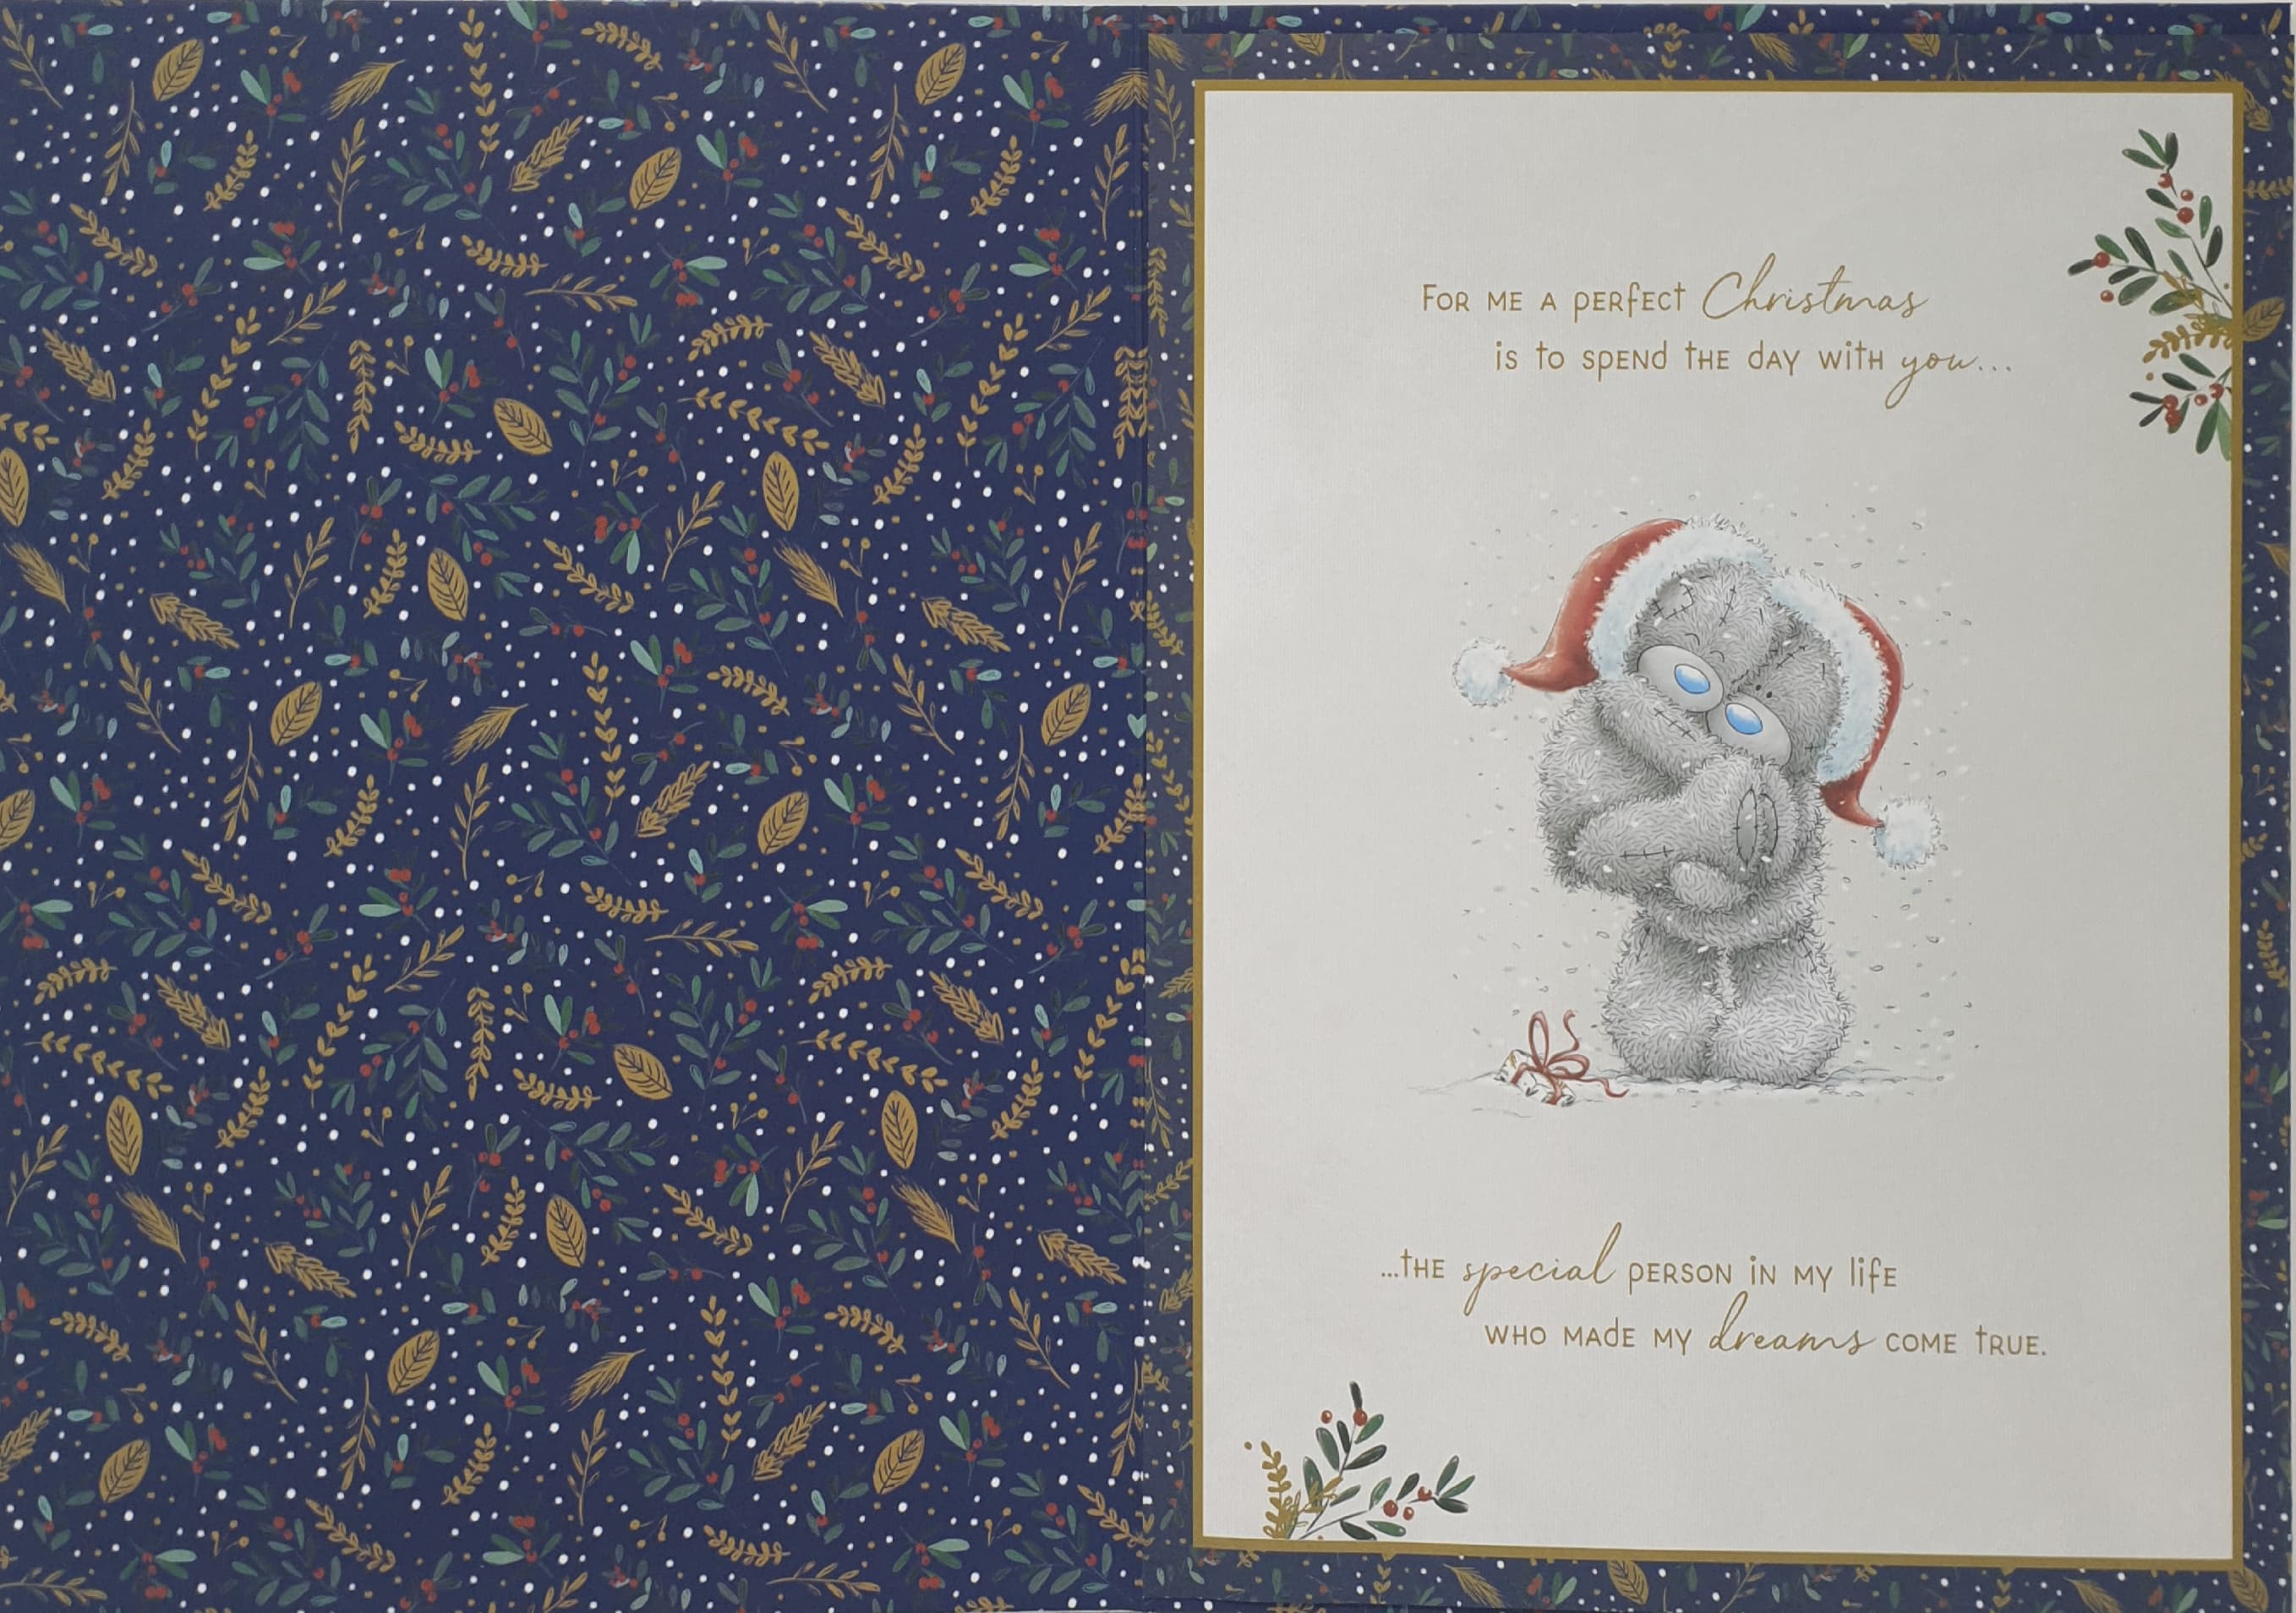 Husband Christmas Card / Cute Bears Putting Presents on Car (Card In A Presentation Box)